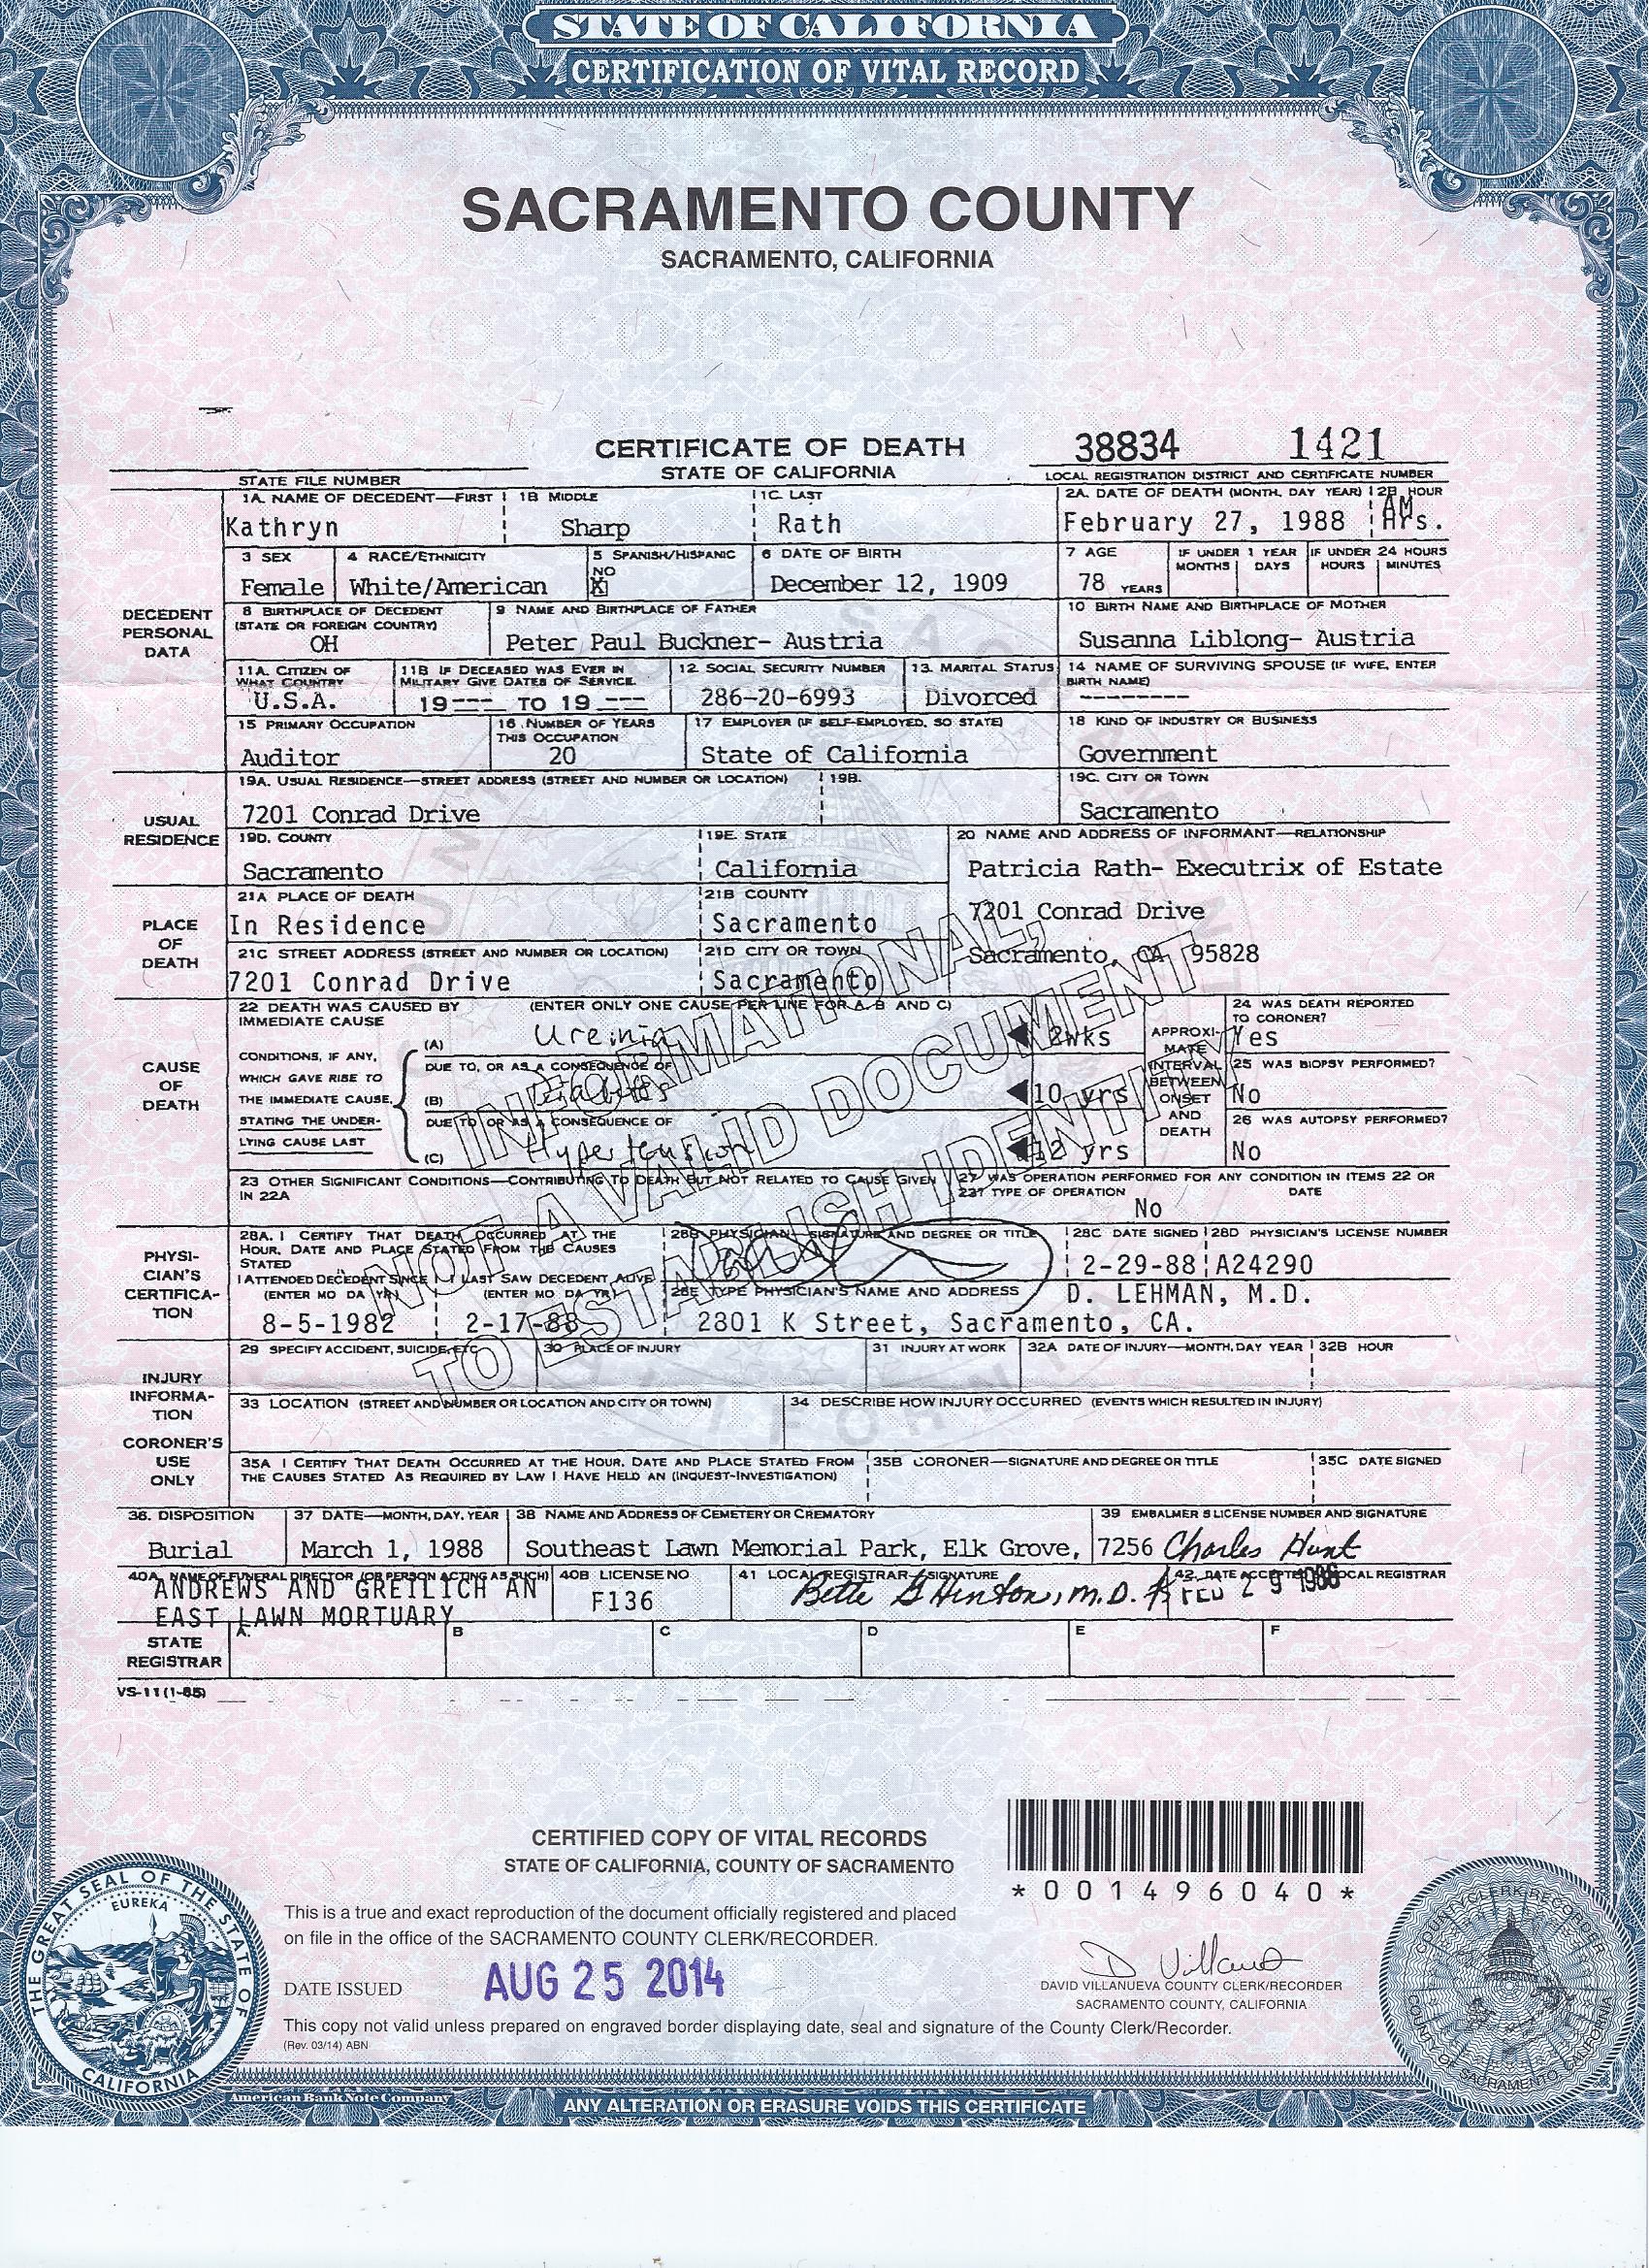 Kathryn Sharp Rath<br>certificate of death